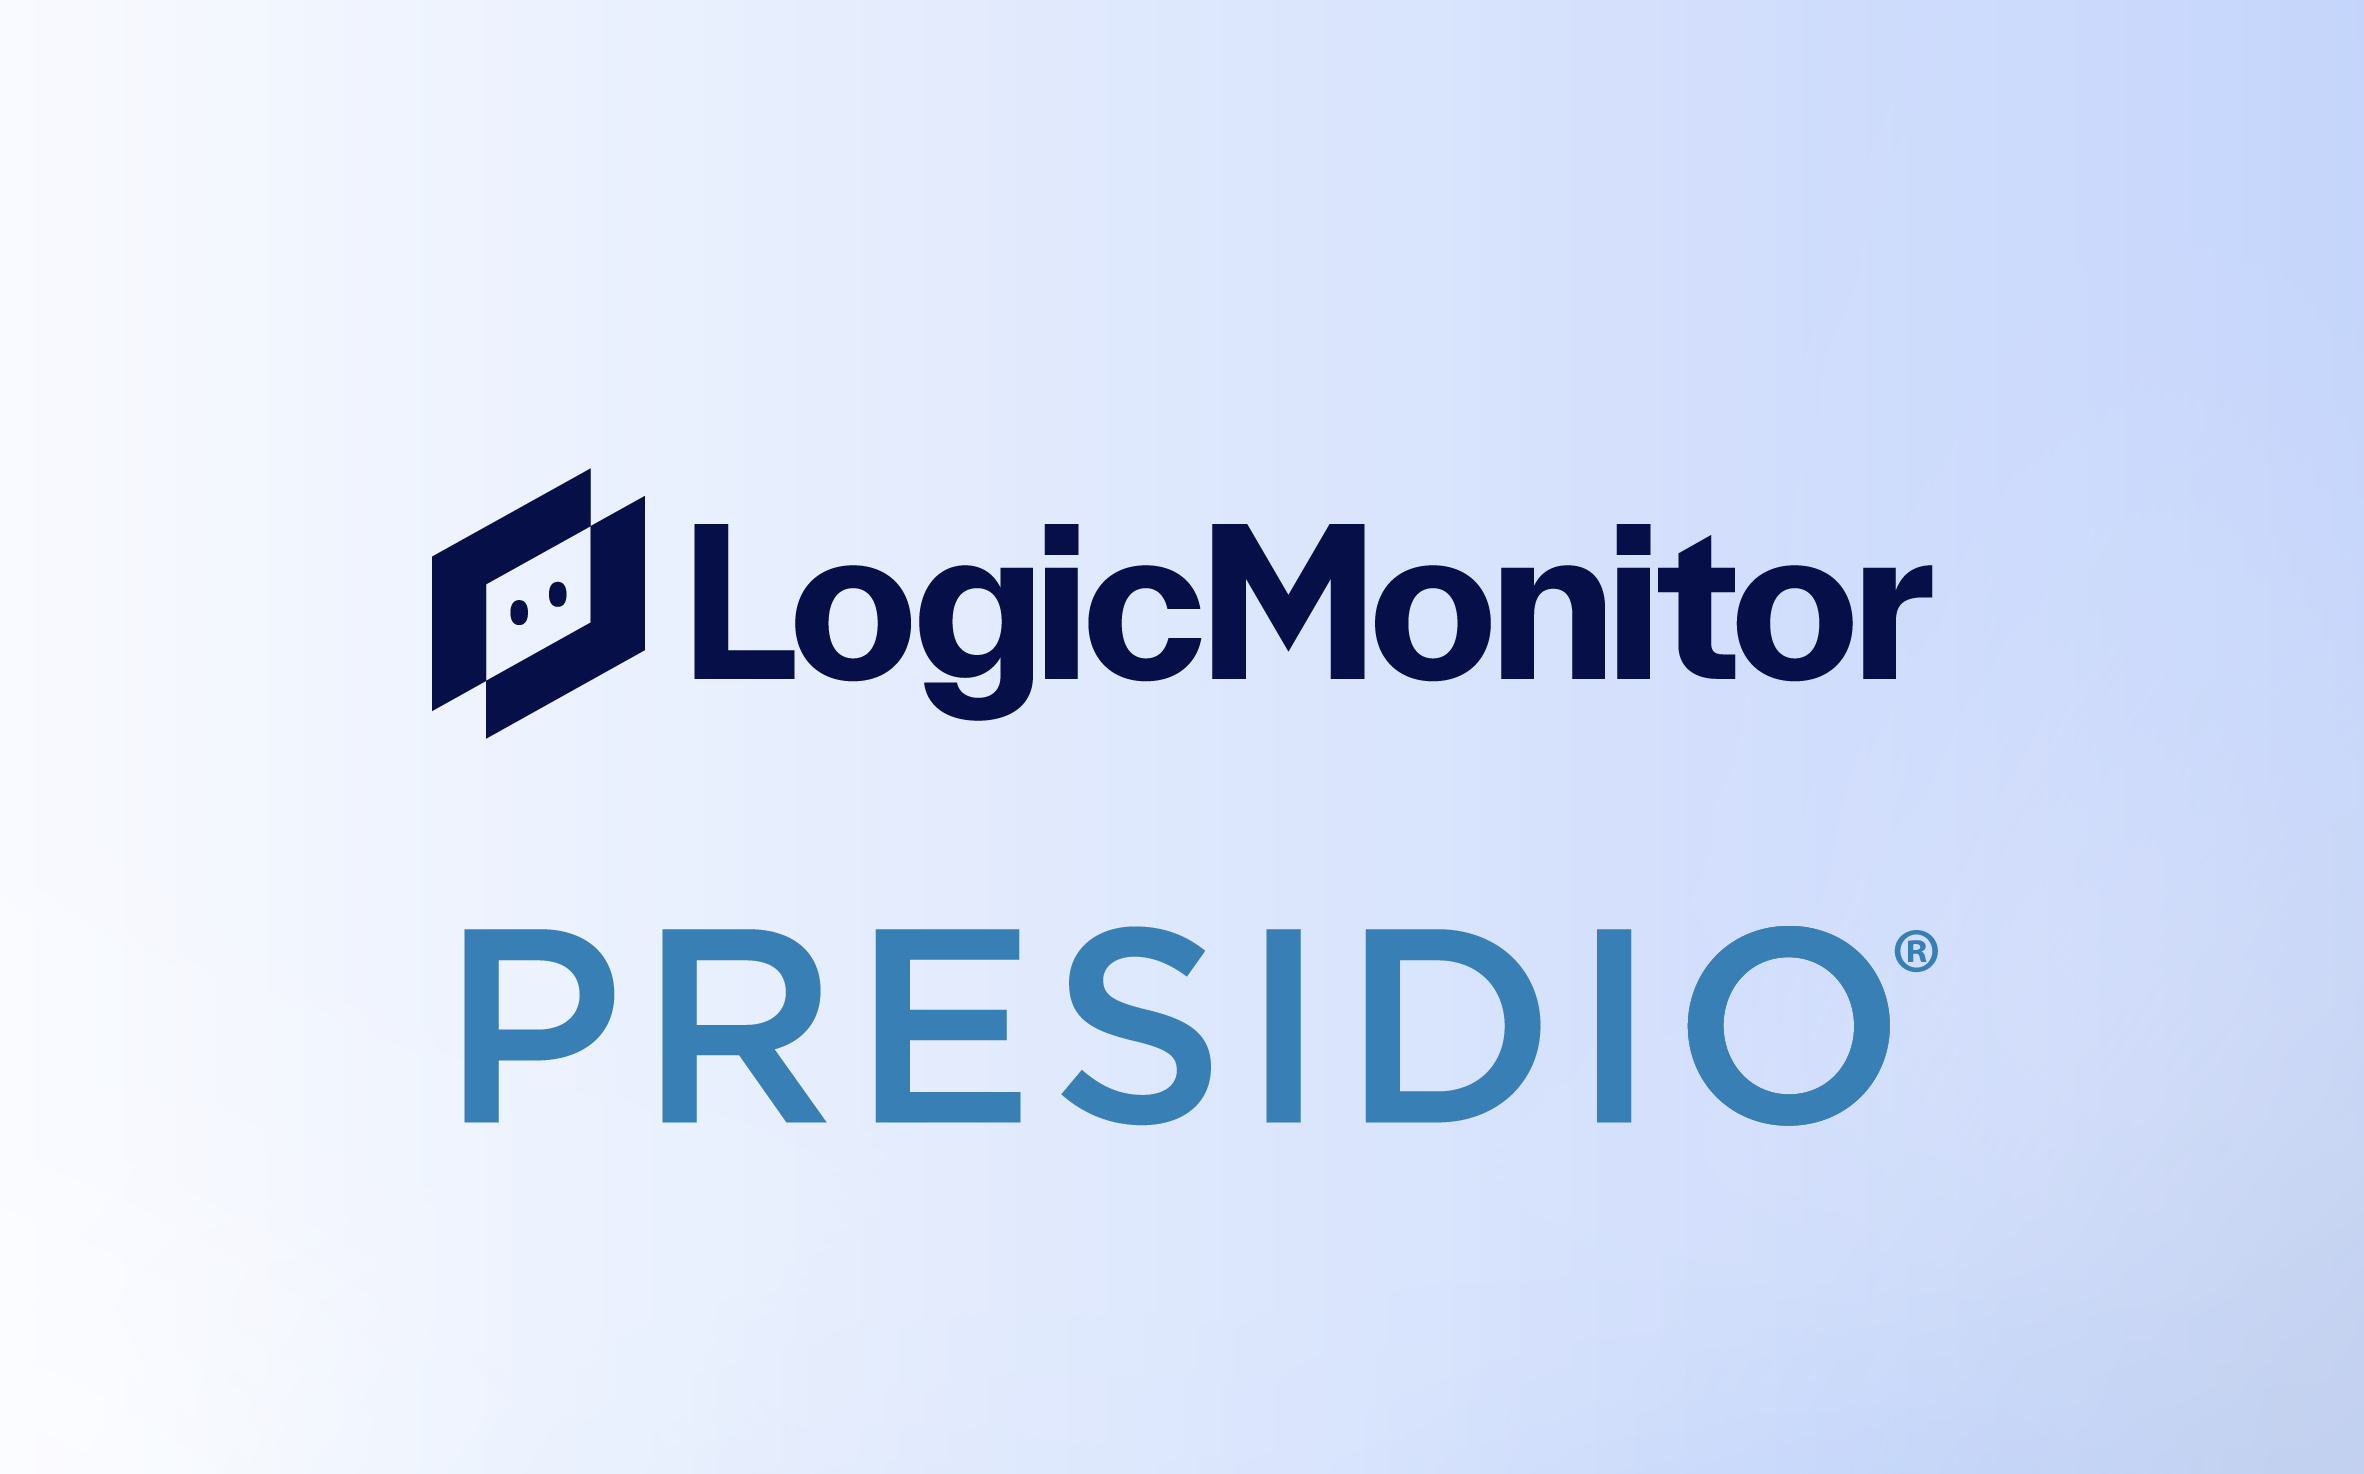 LogicMonitor Presidio logos